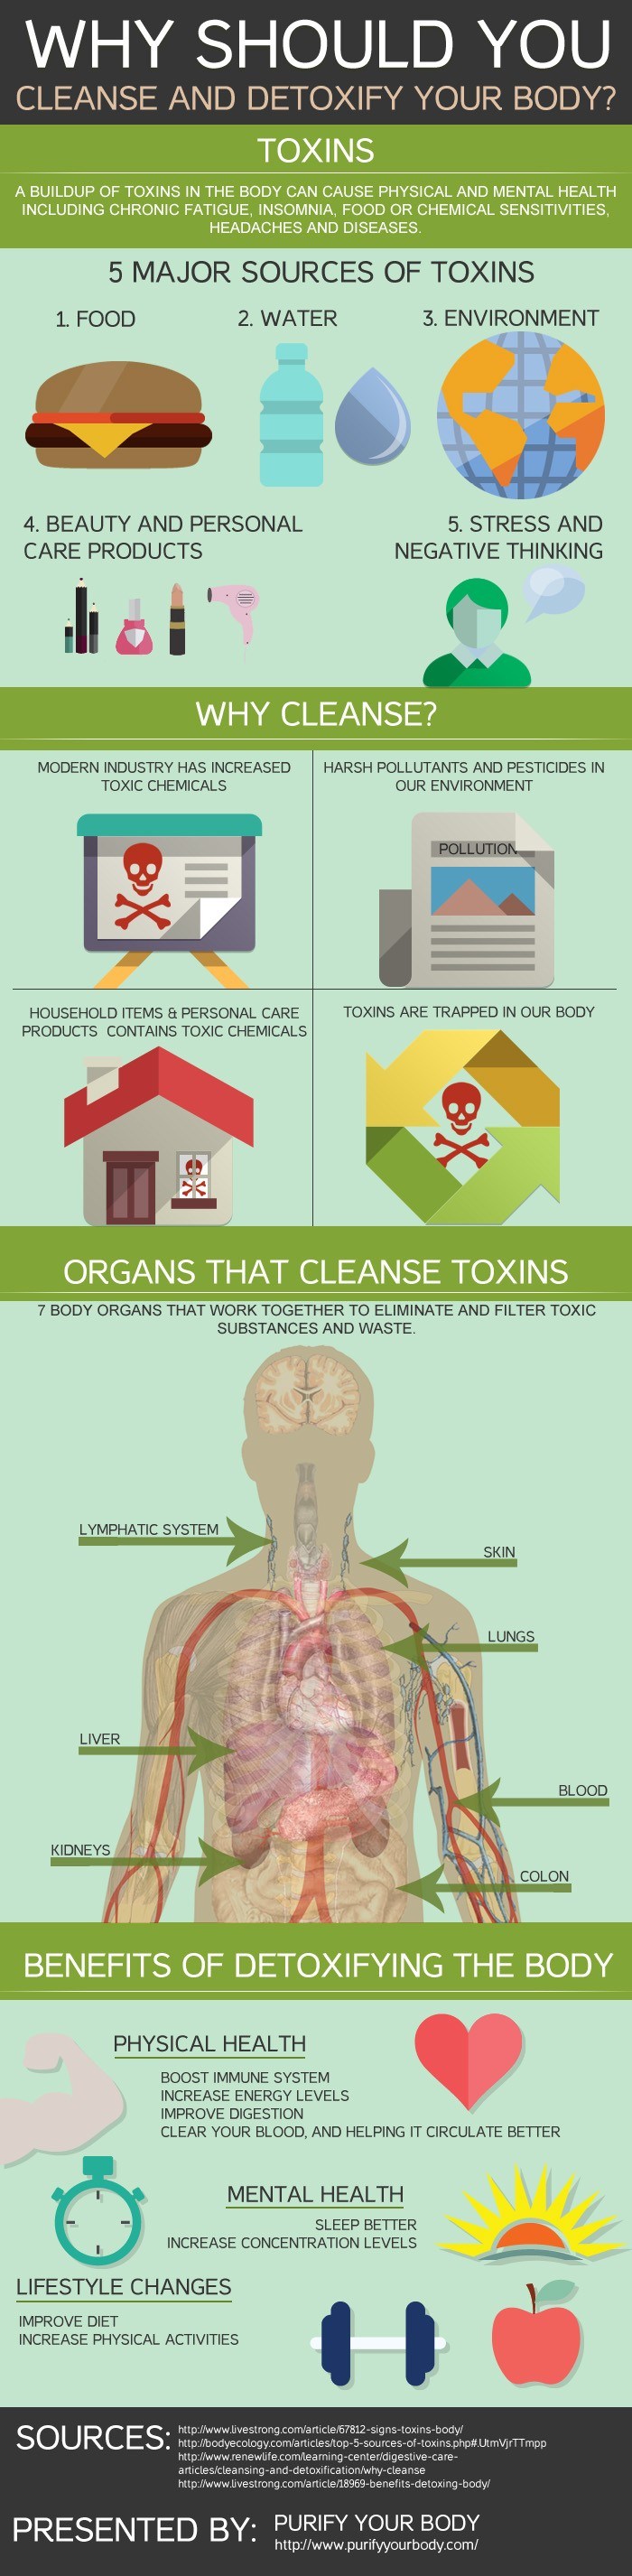 toxins in the body detox)